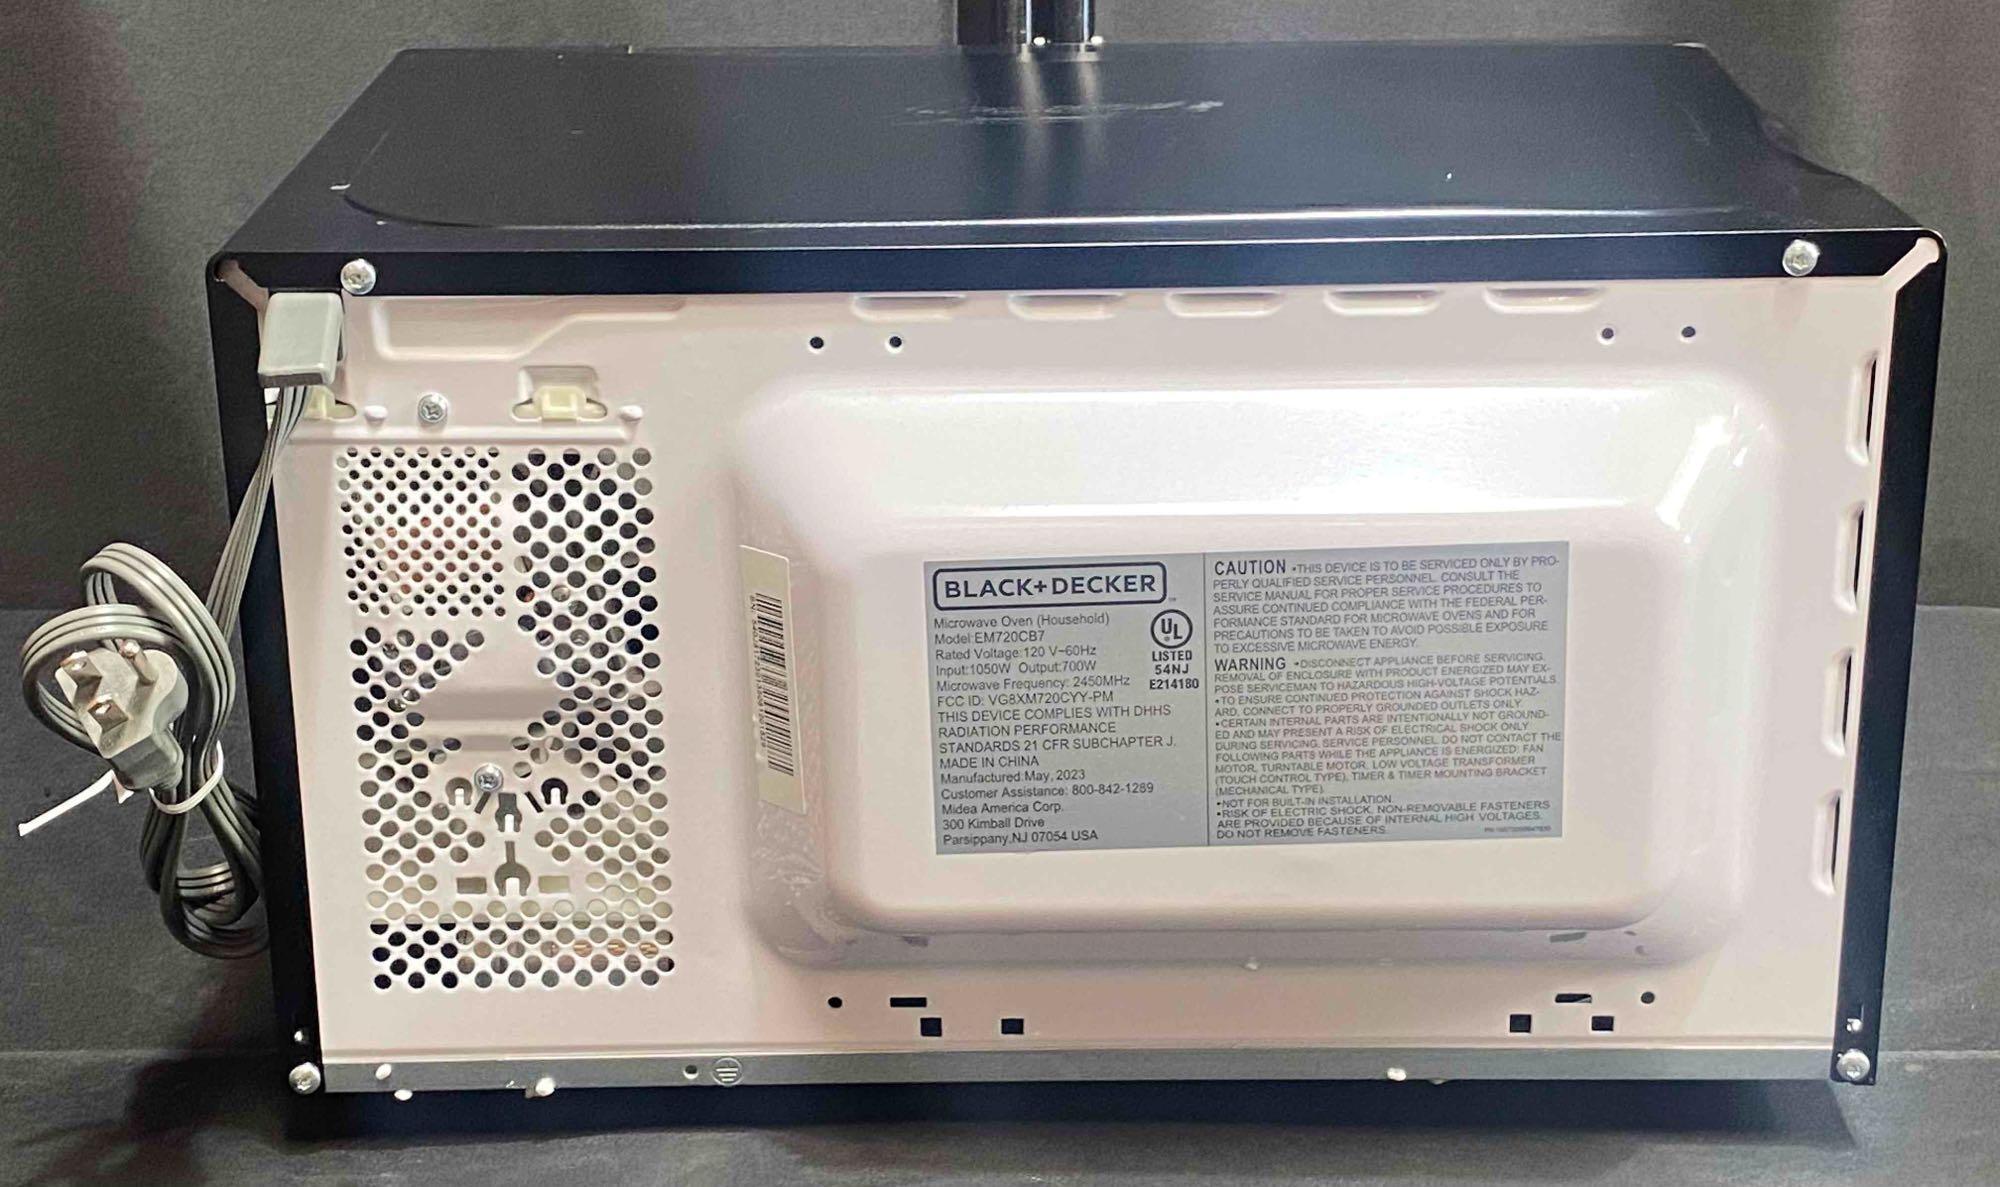 BLACK+DECKER Digital Microwave Oven with Turntable Push-Button Door